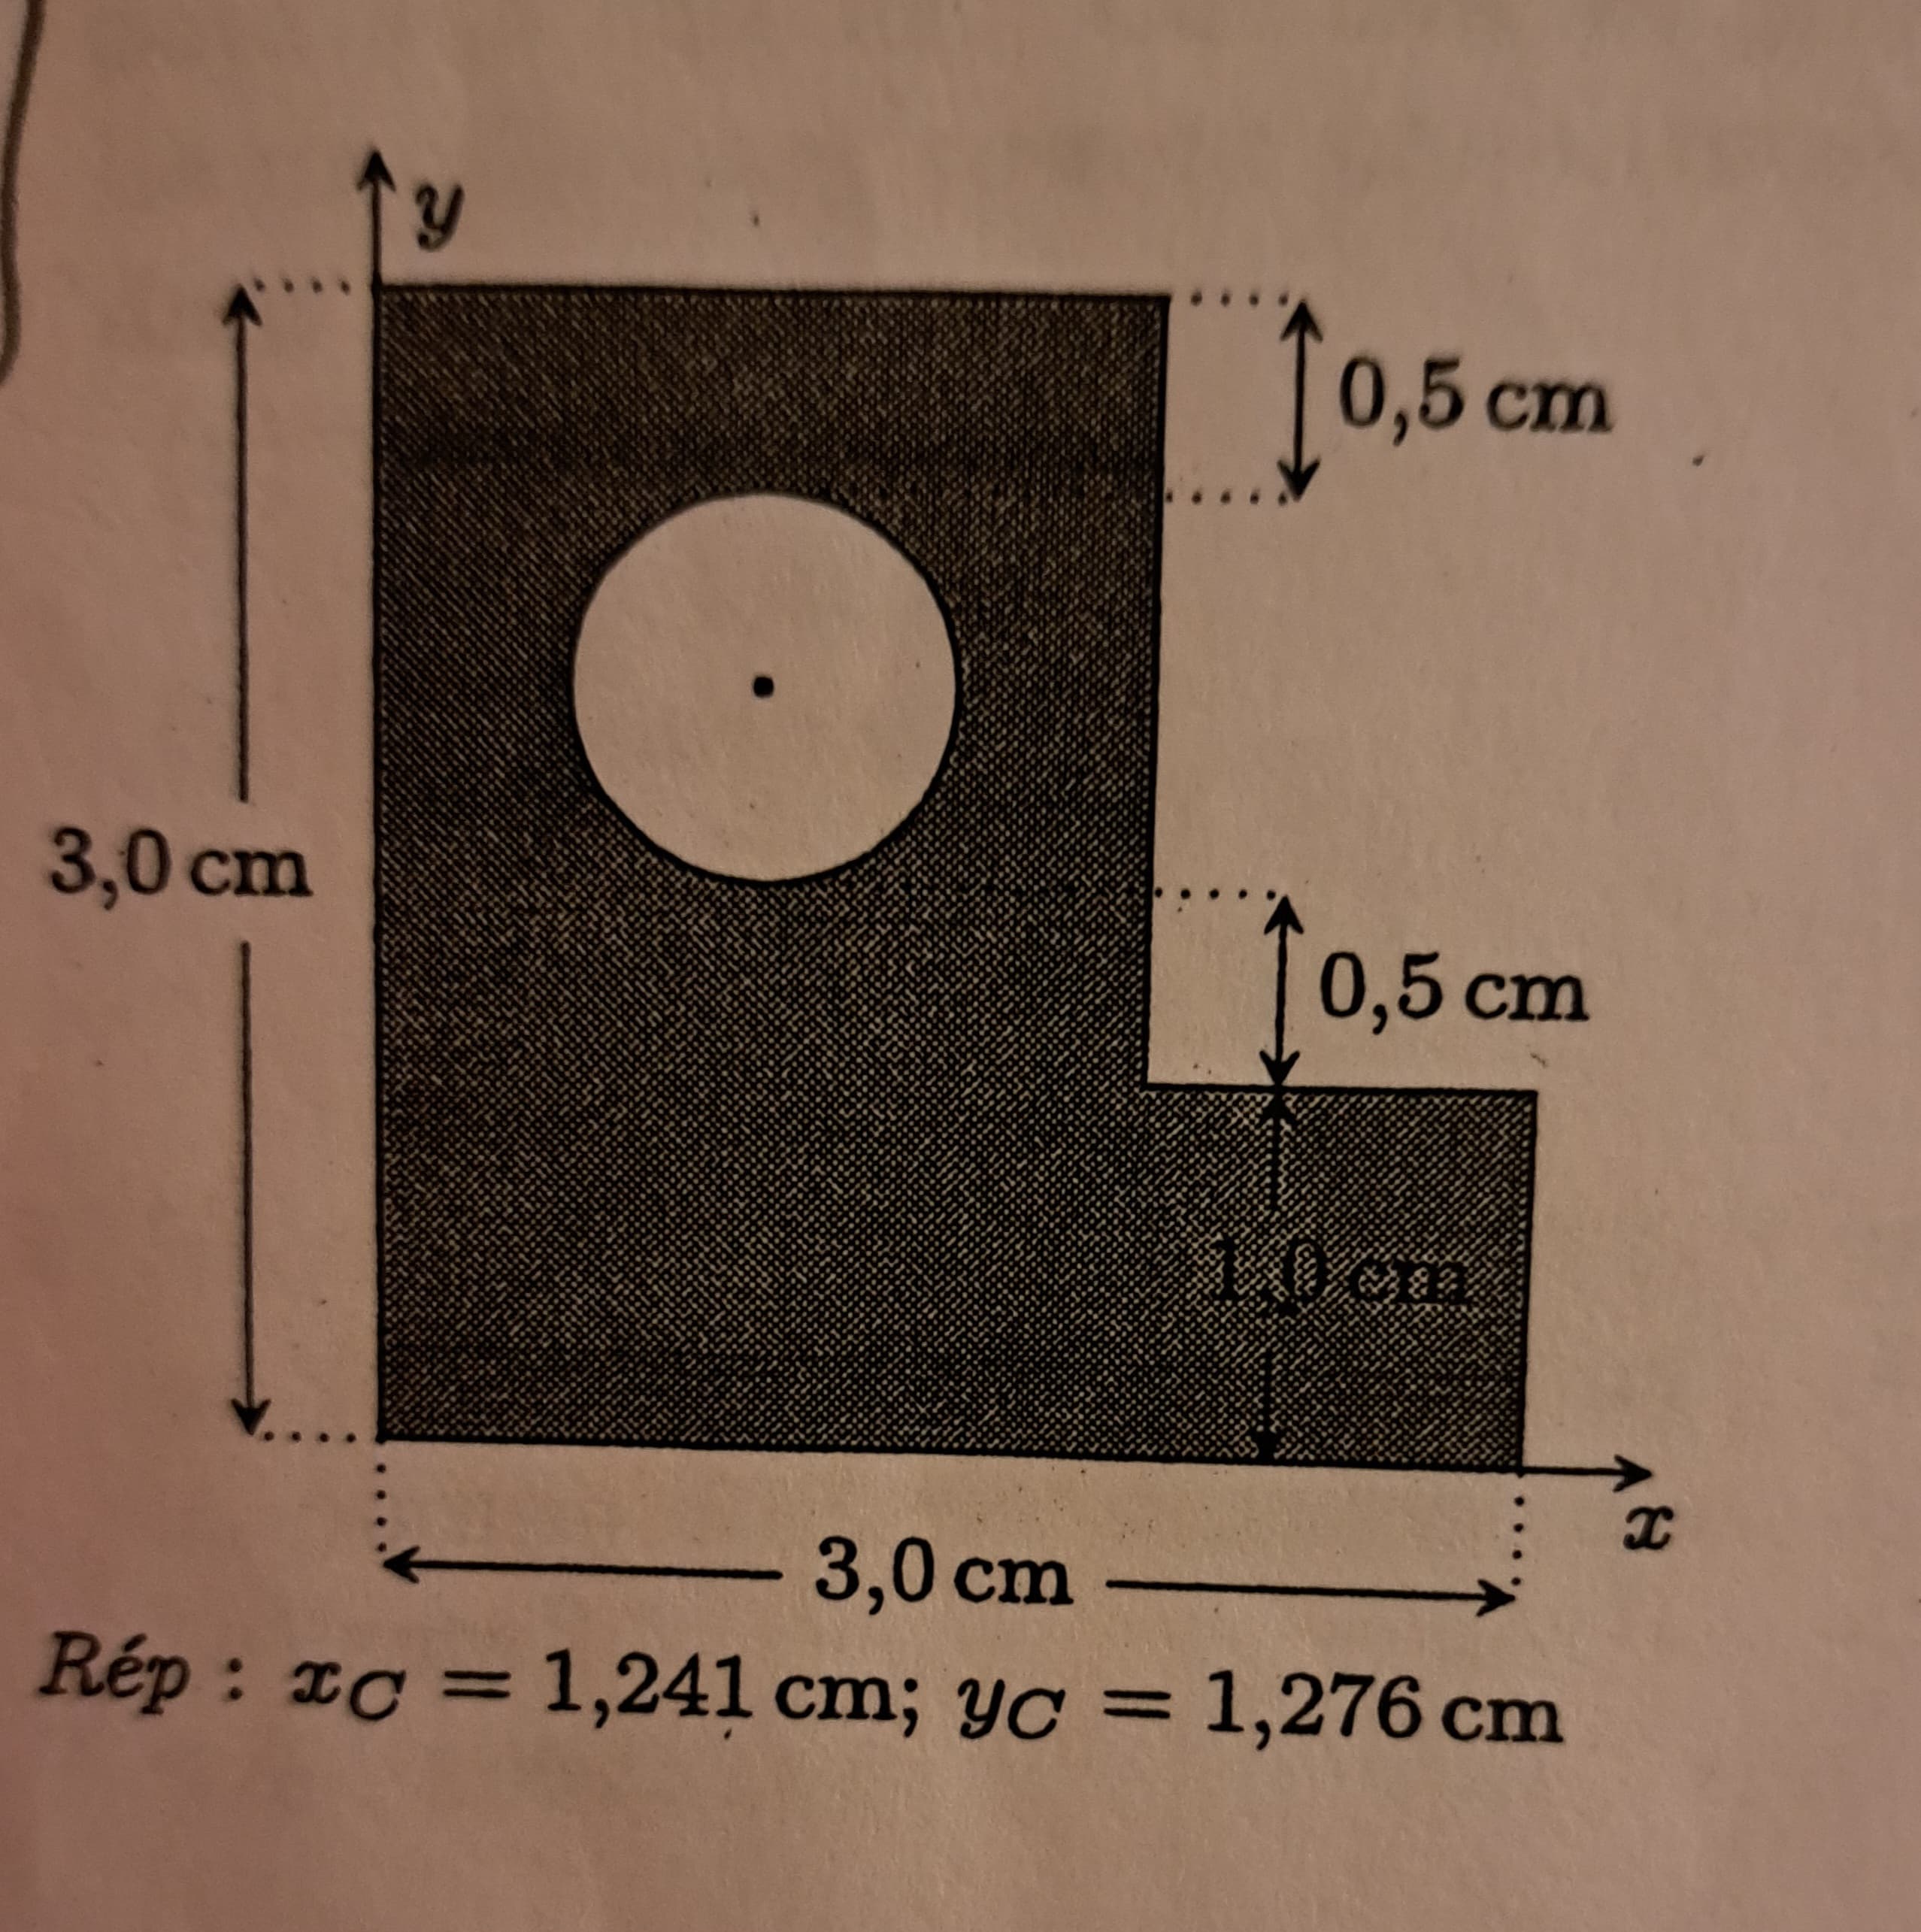 3,0 cm
10,5 cm
0,5 cm
1.0cm
3,0 cm
Rép: xc = 1,241 cm; yc = 1,276 cm
8